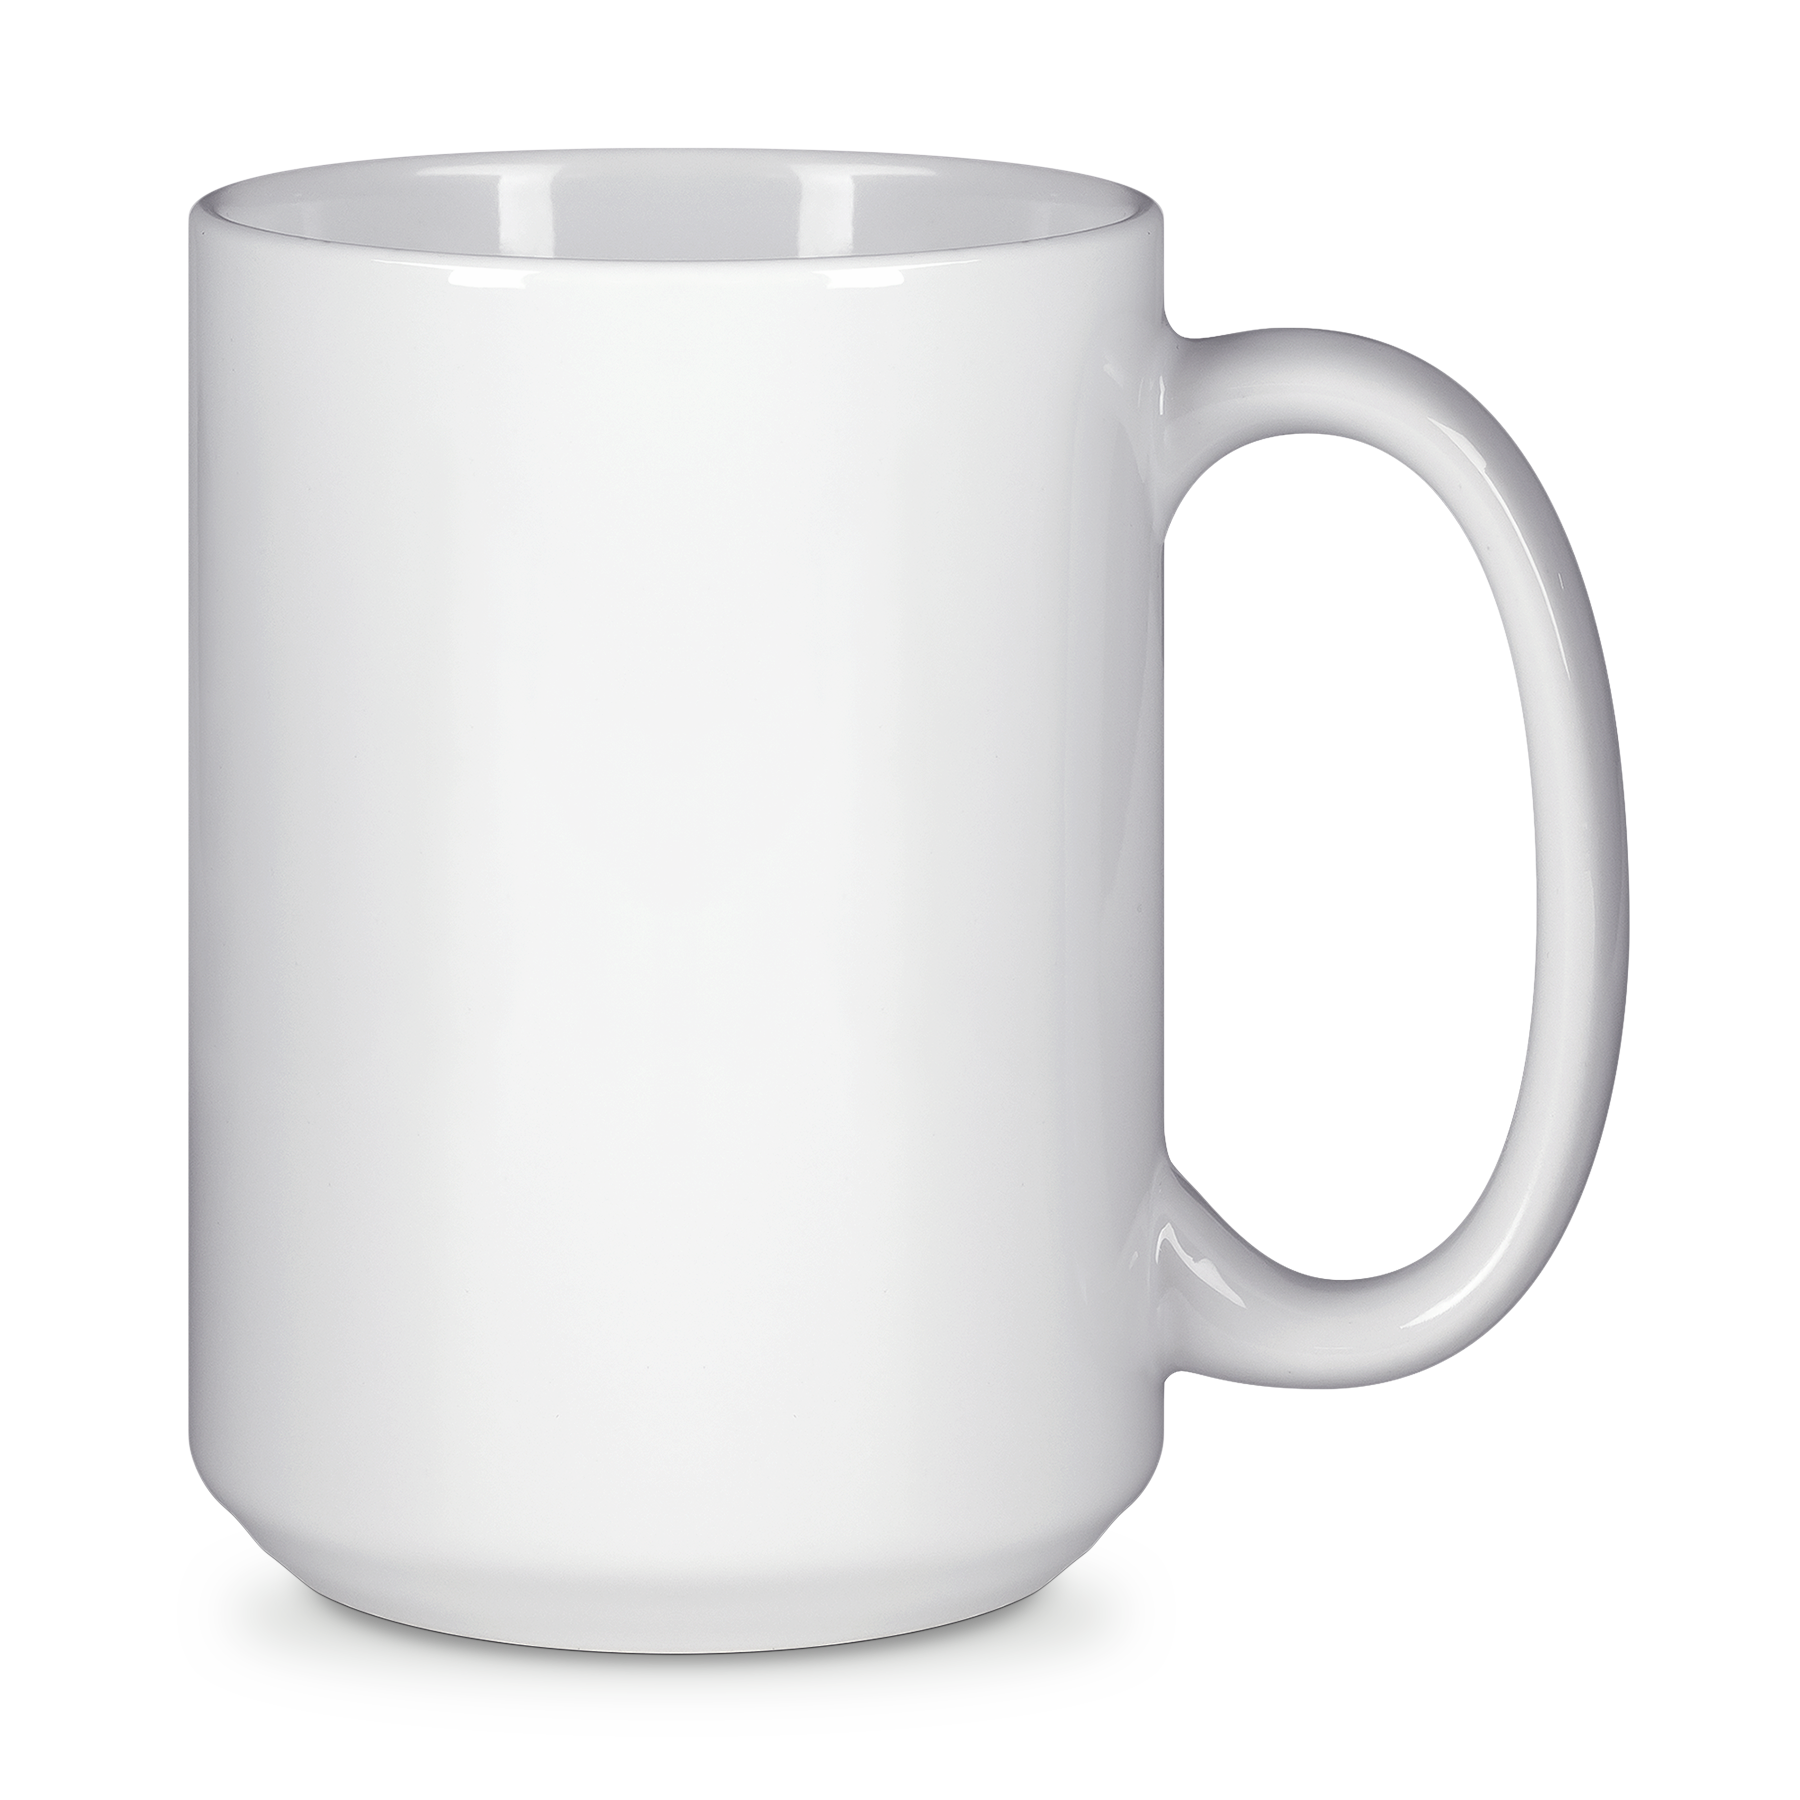 15 oz White Mug